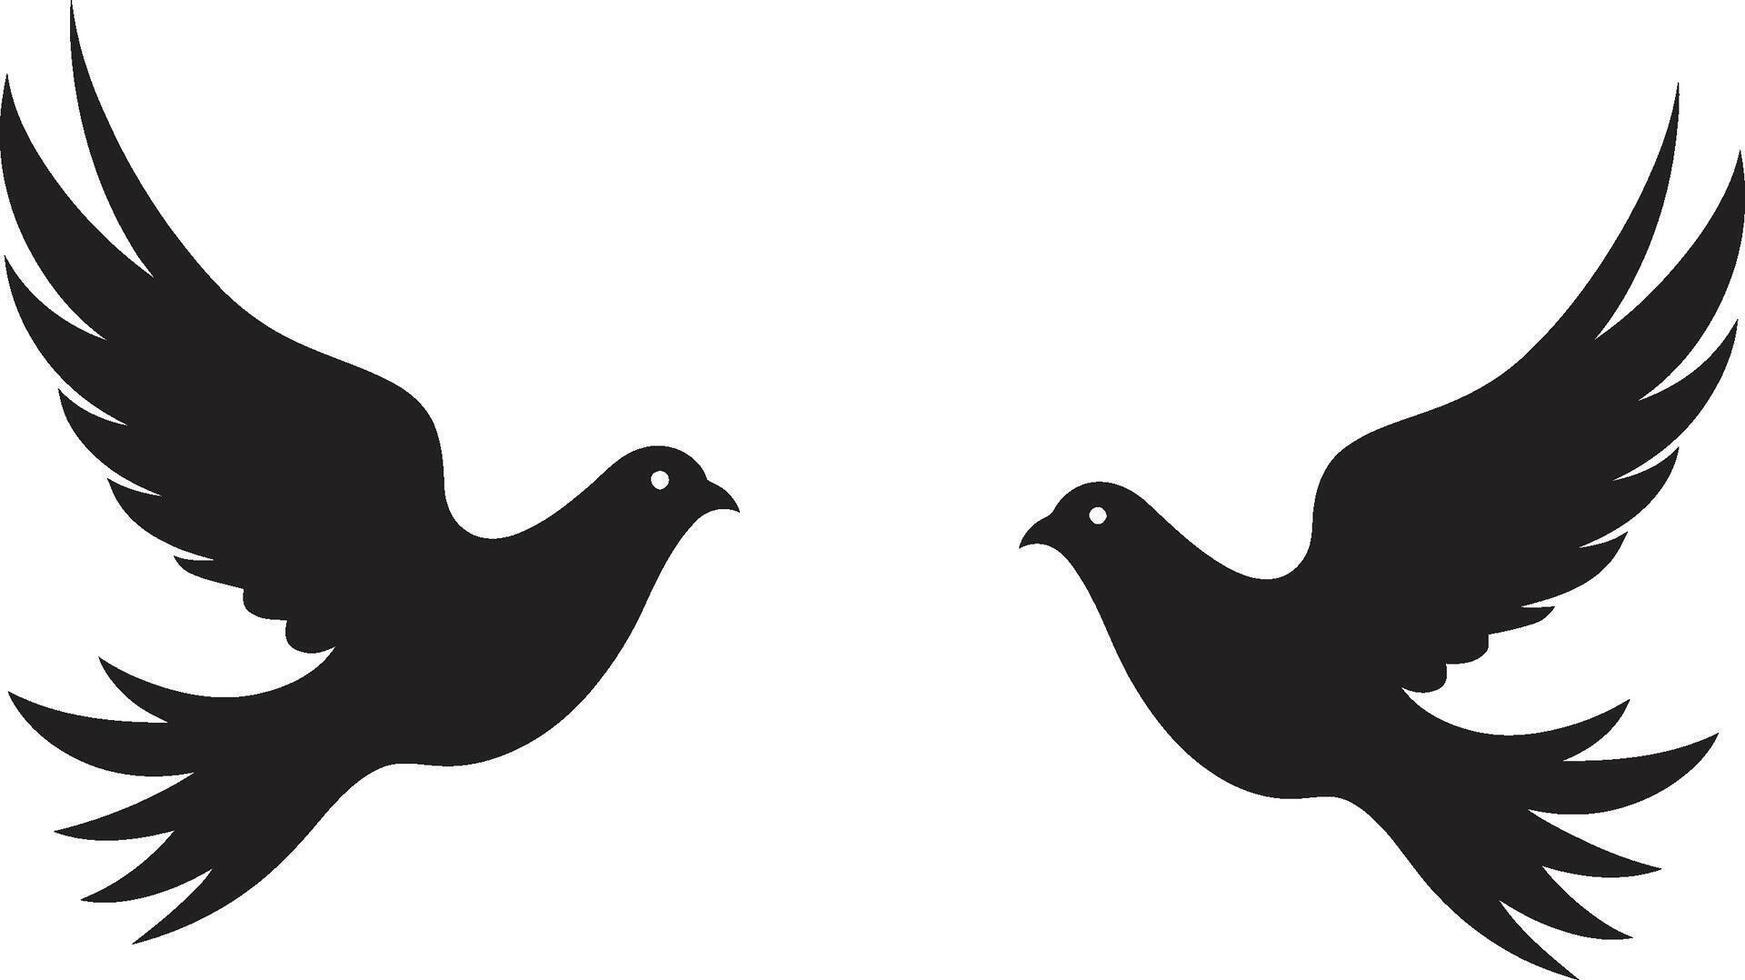 Infinite Serenity Dove Pair Emblem Duet of Devotion of a Dove Pair vector